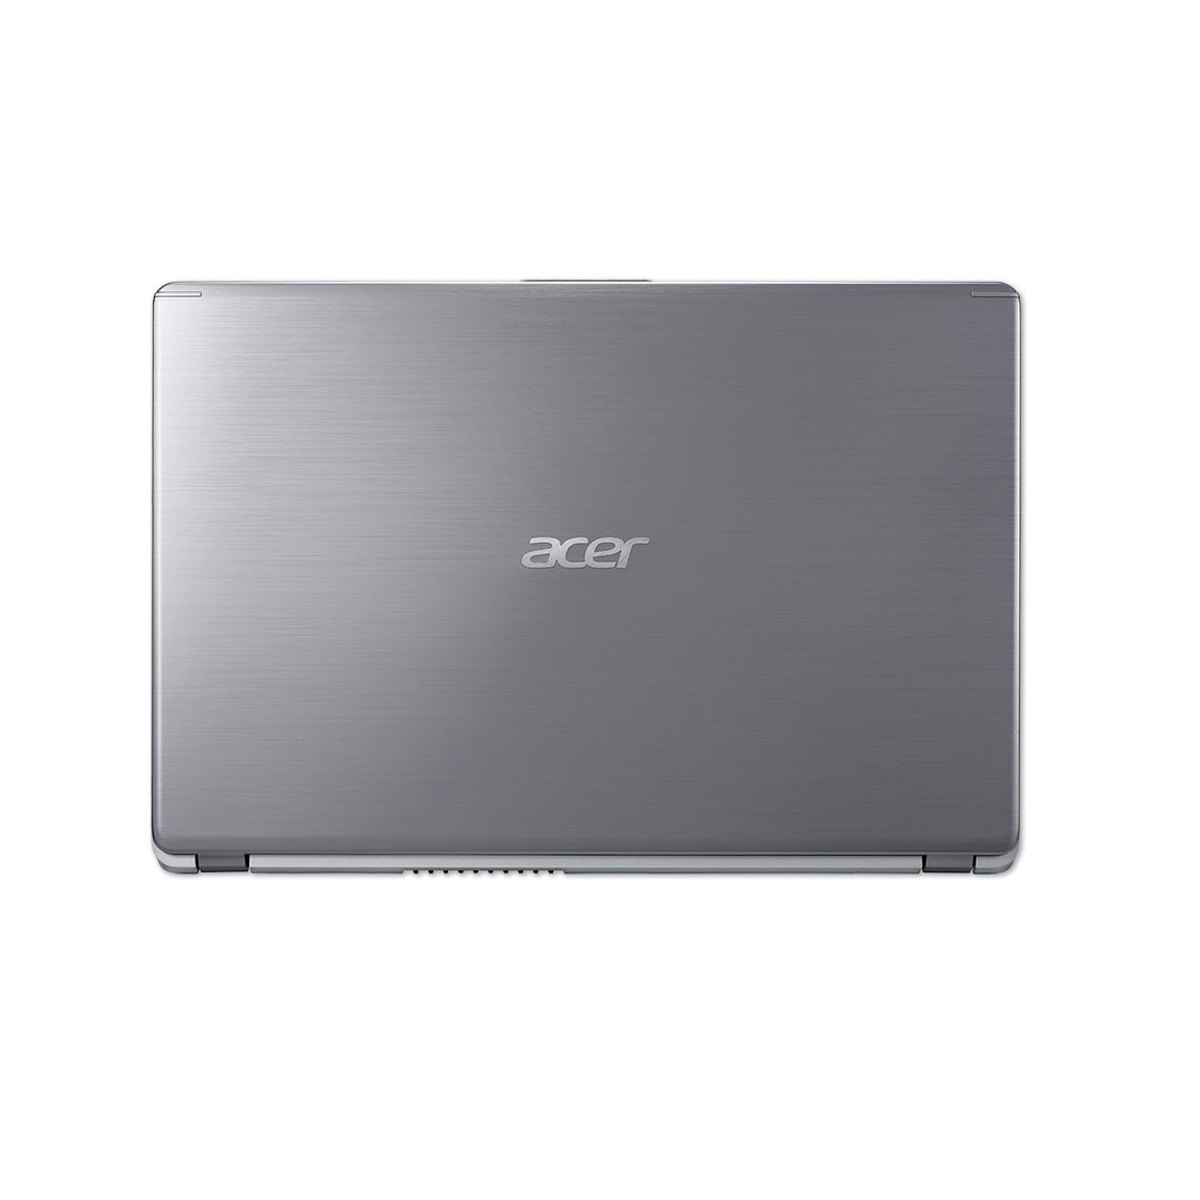 Notebook Acer A515 Core I5 8265u Memoria 8gb Ddr4 Ssd 240gb Tela 15.6' Led Hd Windows 10 Home 